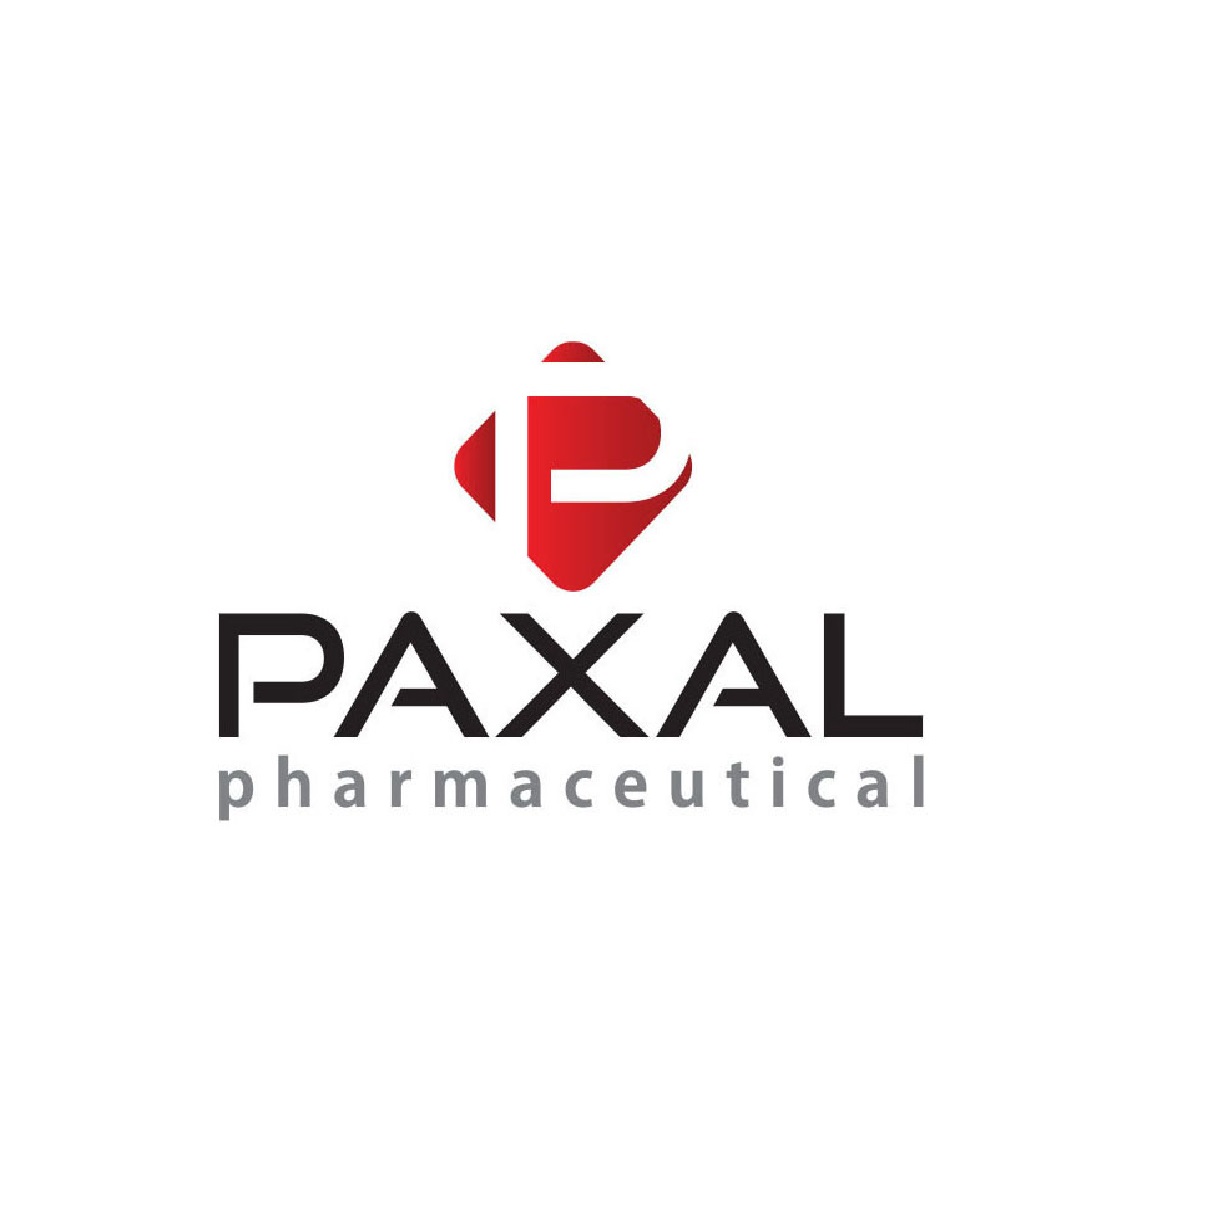 Paxal Pharmaceutical